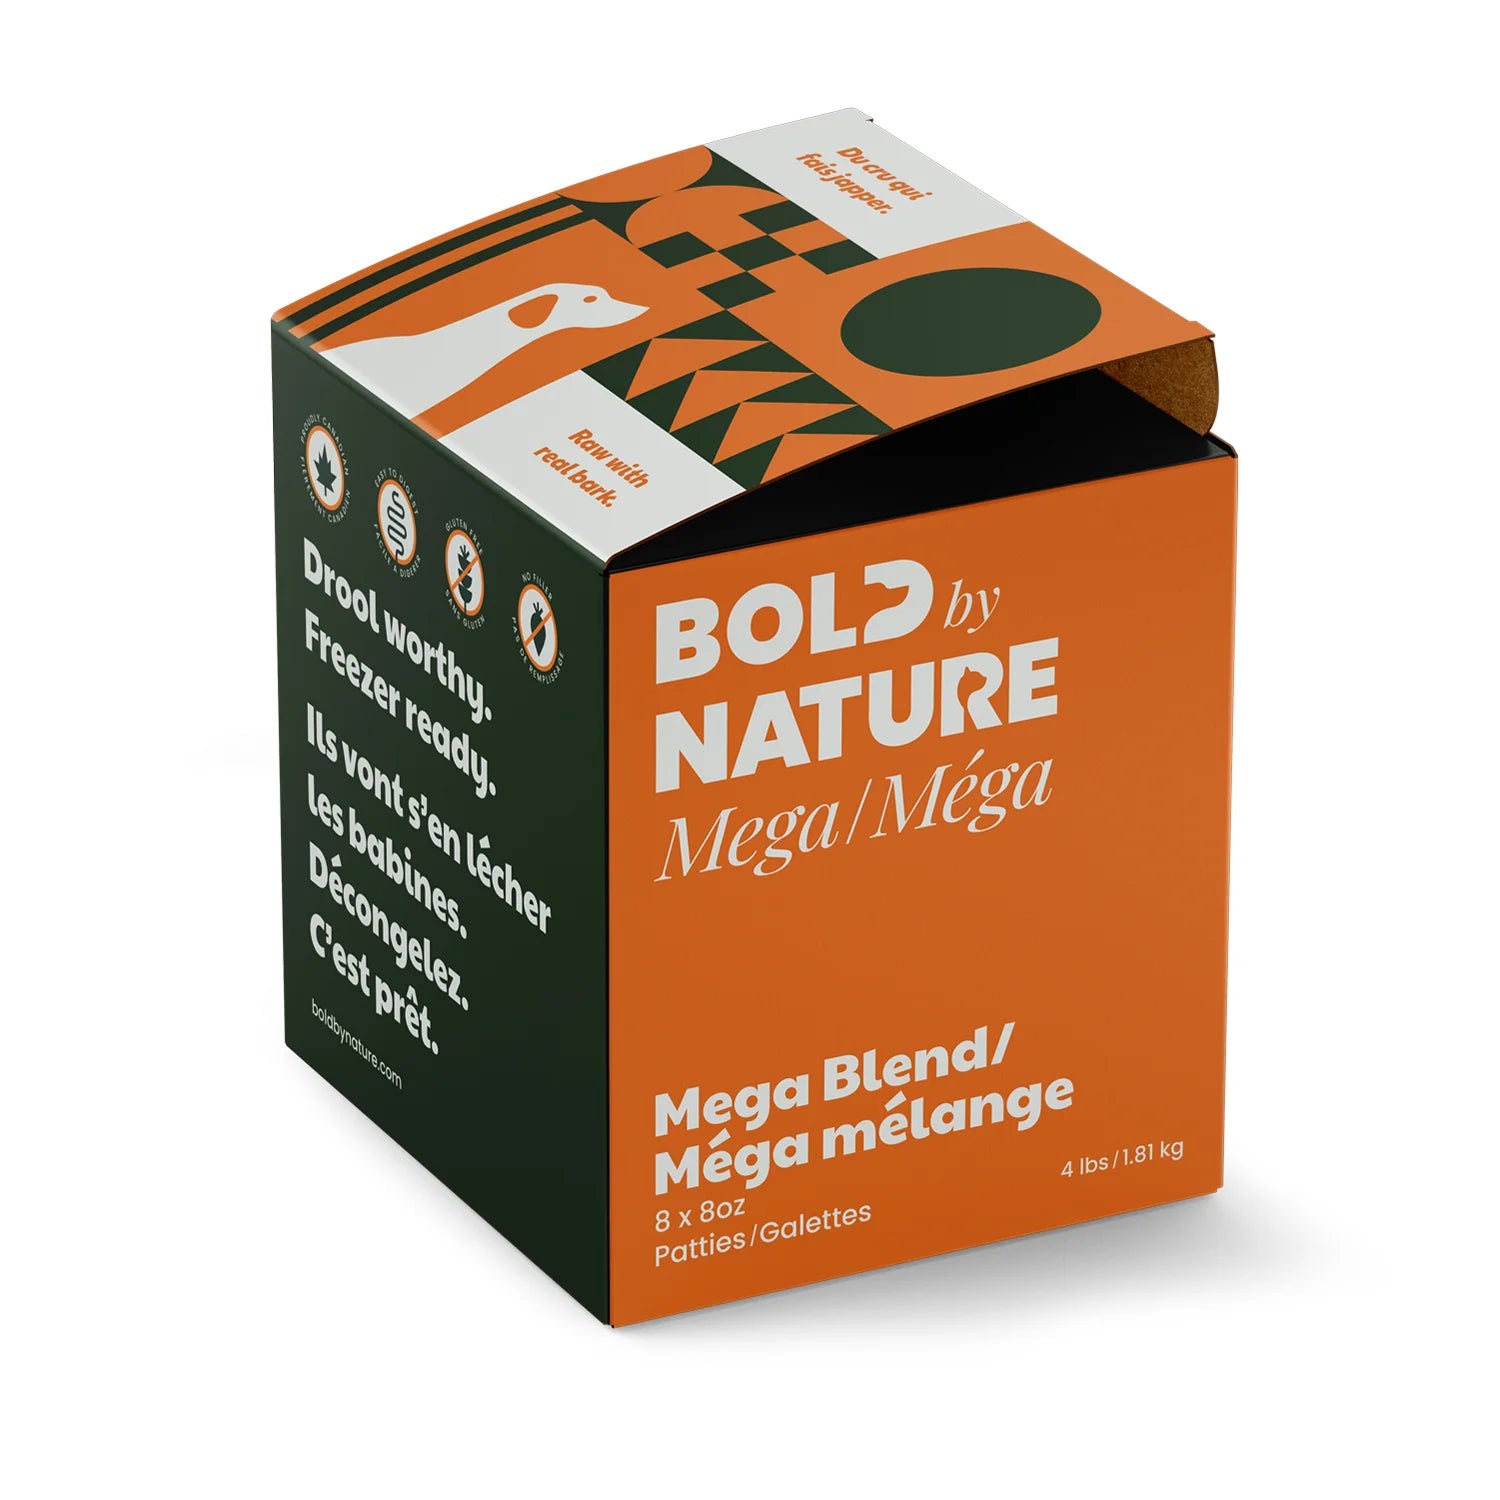 Bold By Nature Mega Blend Patties 4 LB and 24 LB